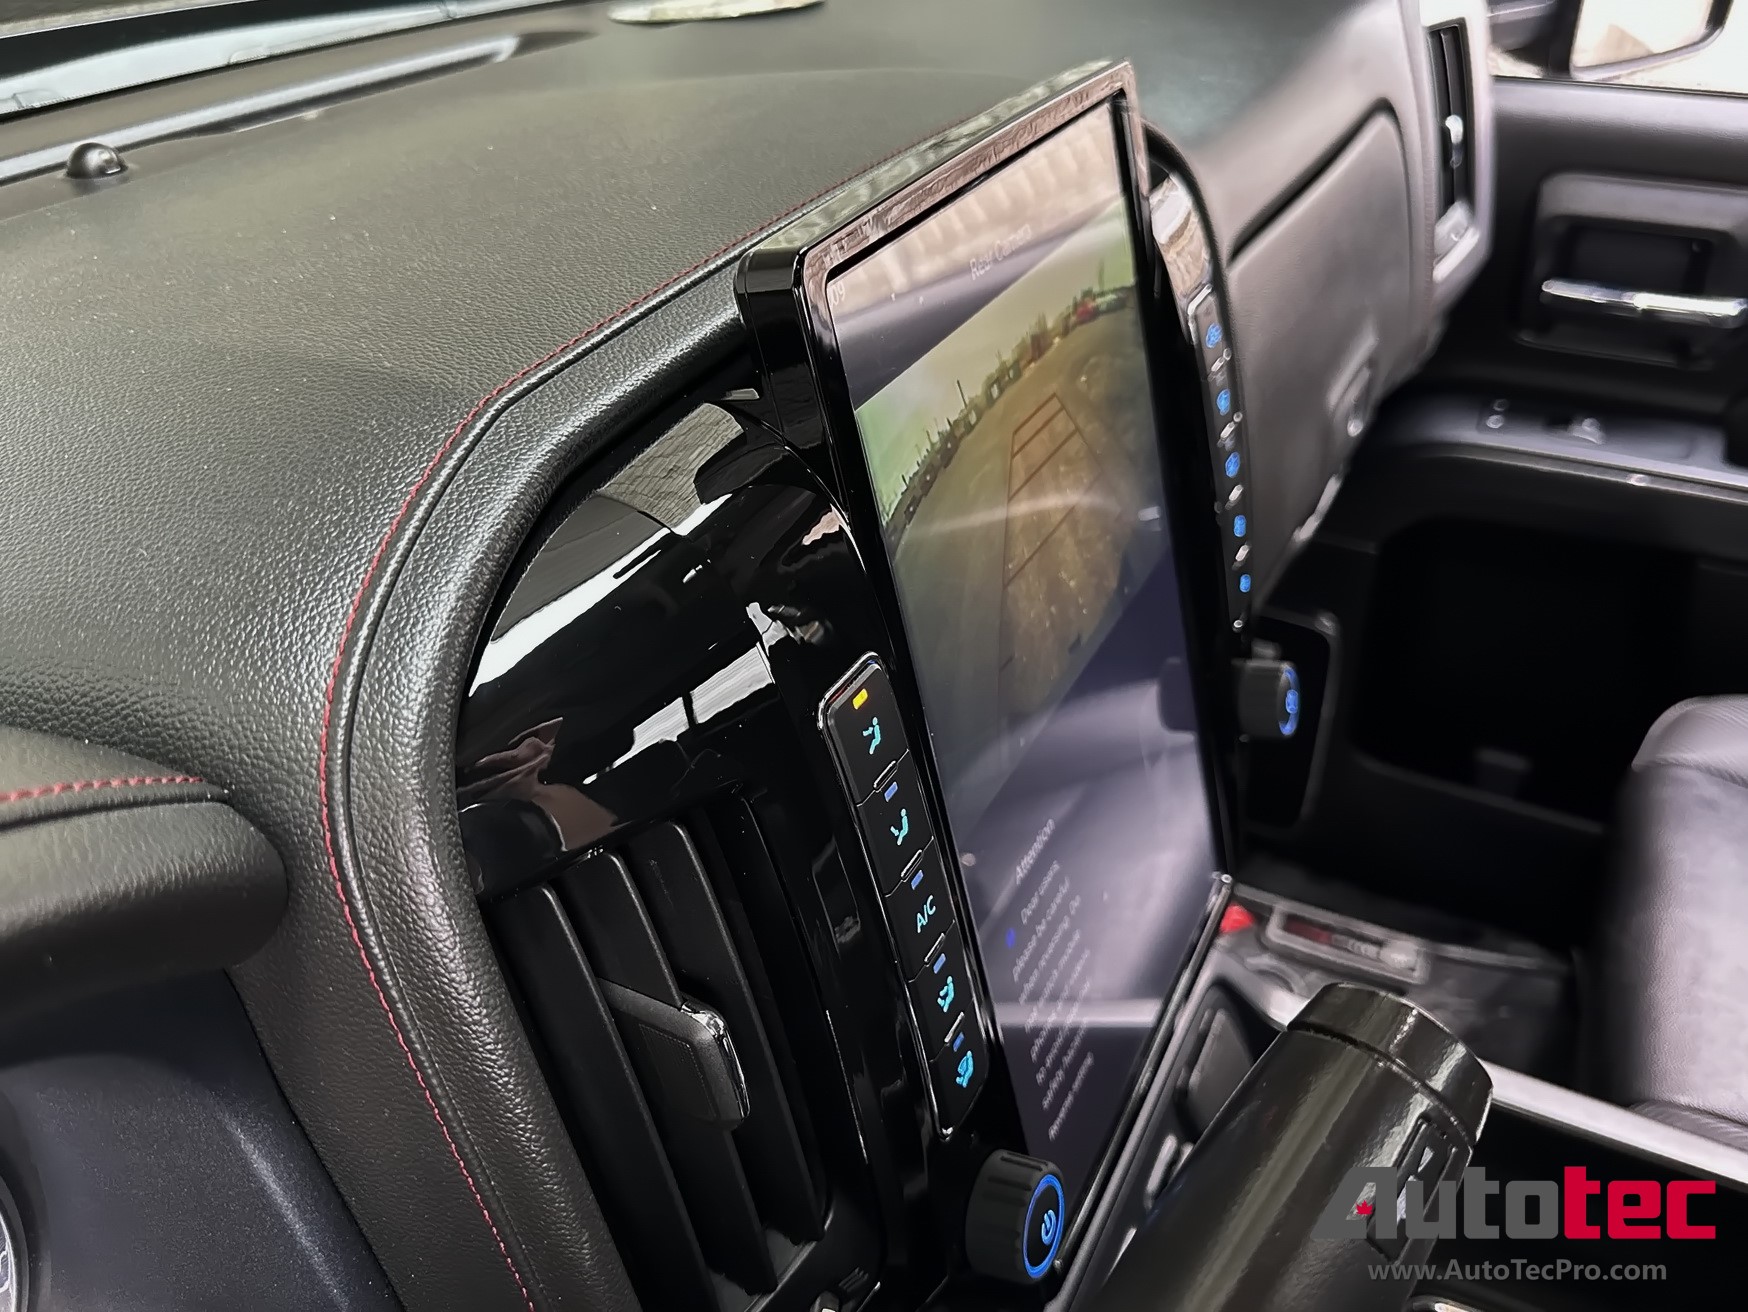 Chevrolet Silverado / GMC Sierra 14.4″ IPS QHD 2K Touch-Screen Navigation & Infotainment System | Android 11 | GPS | BT | Wifi | CarPlay | Onstar | 4G LTE